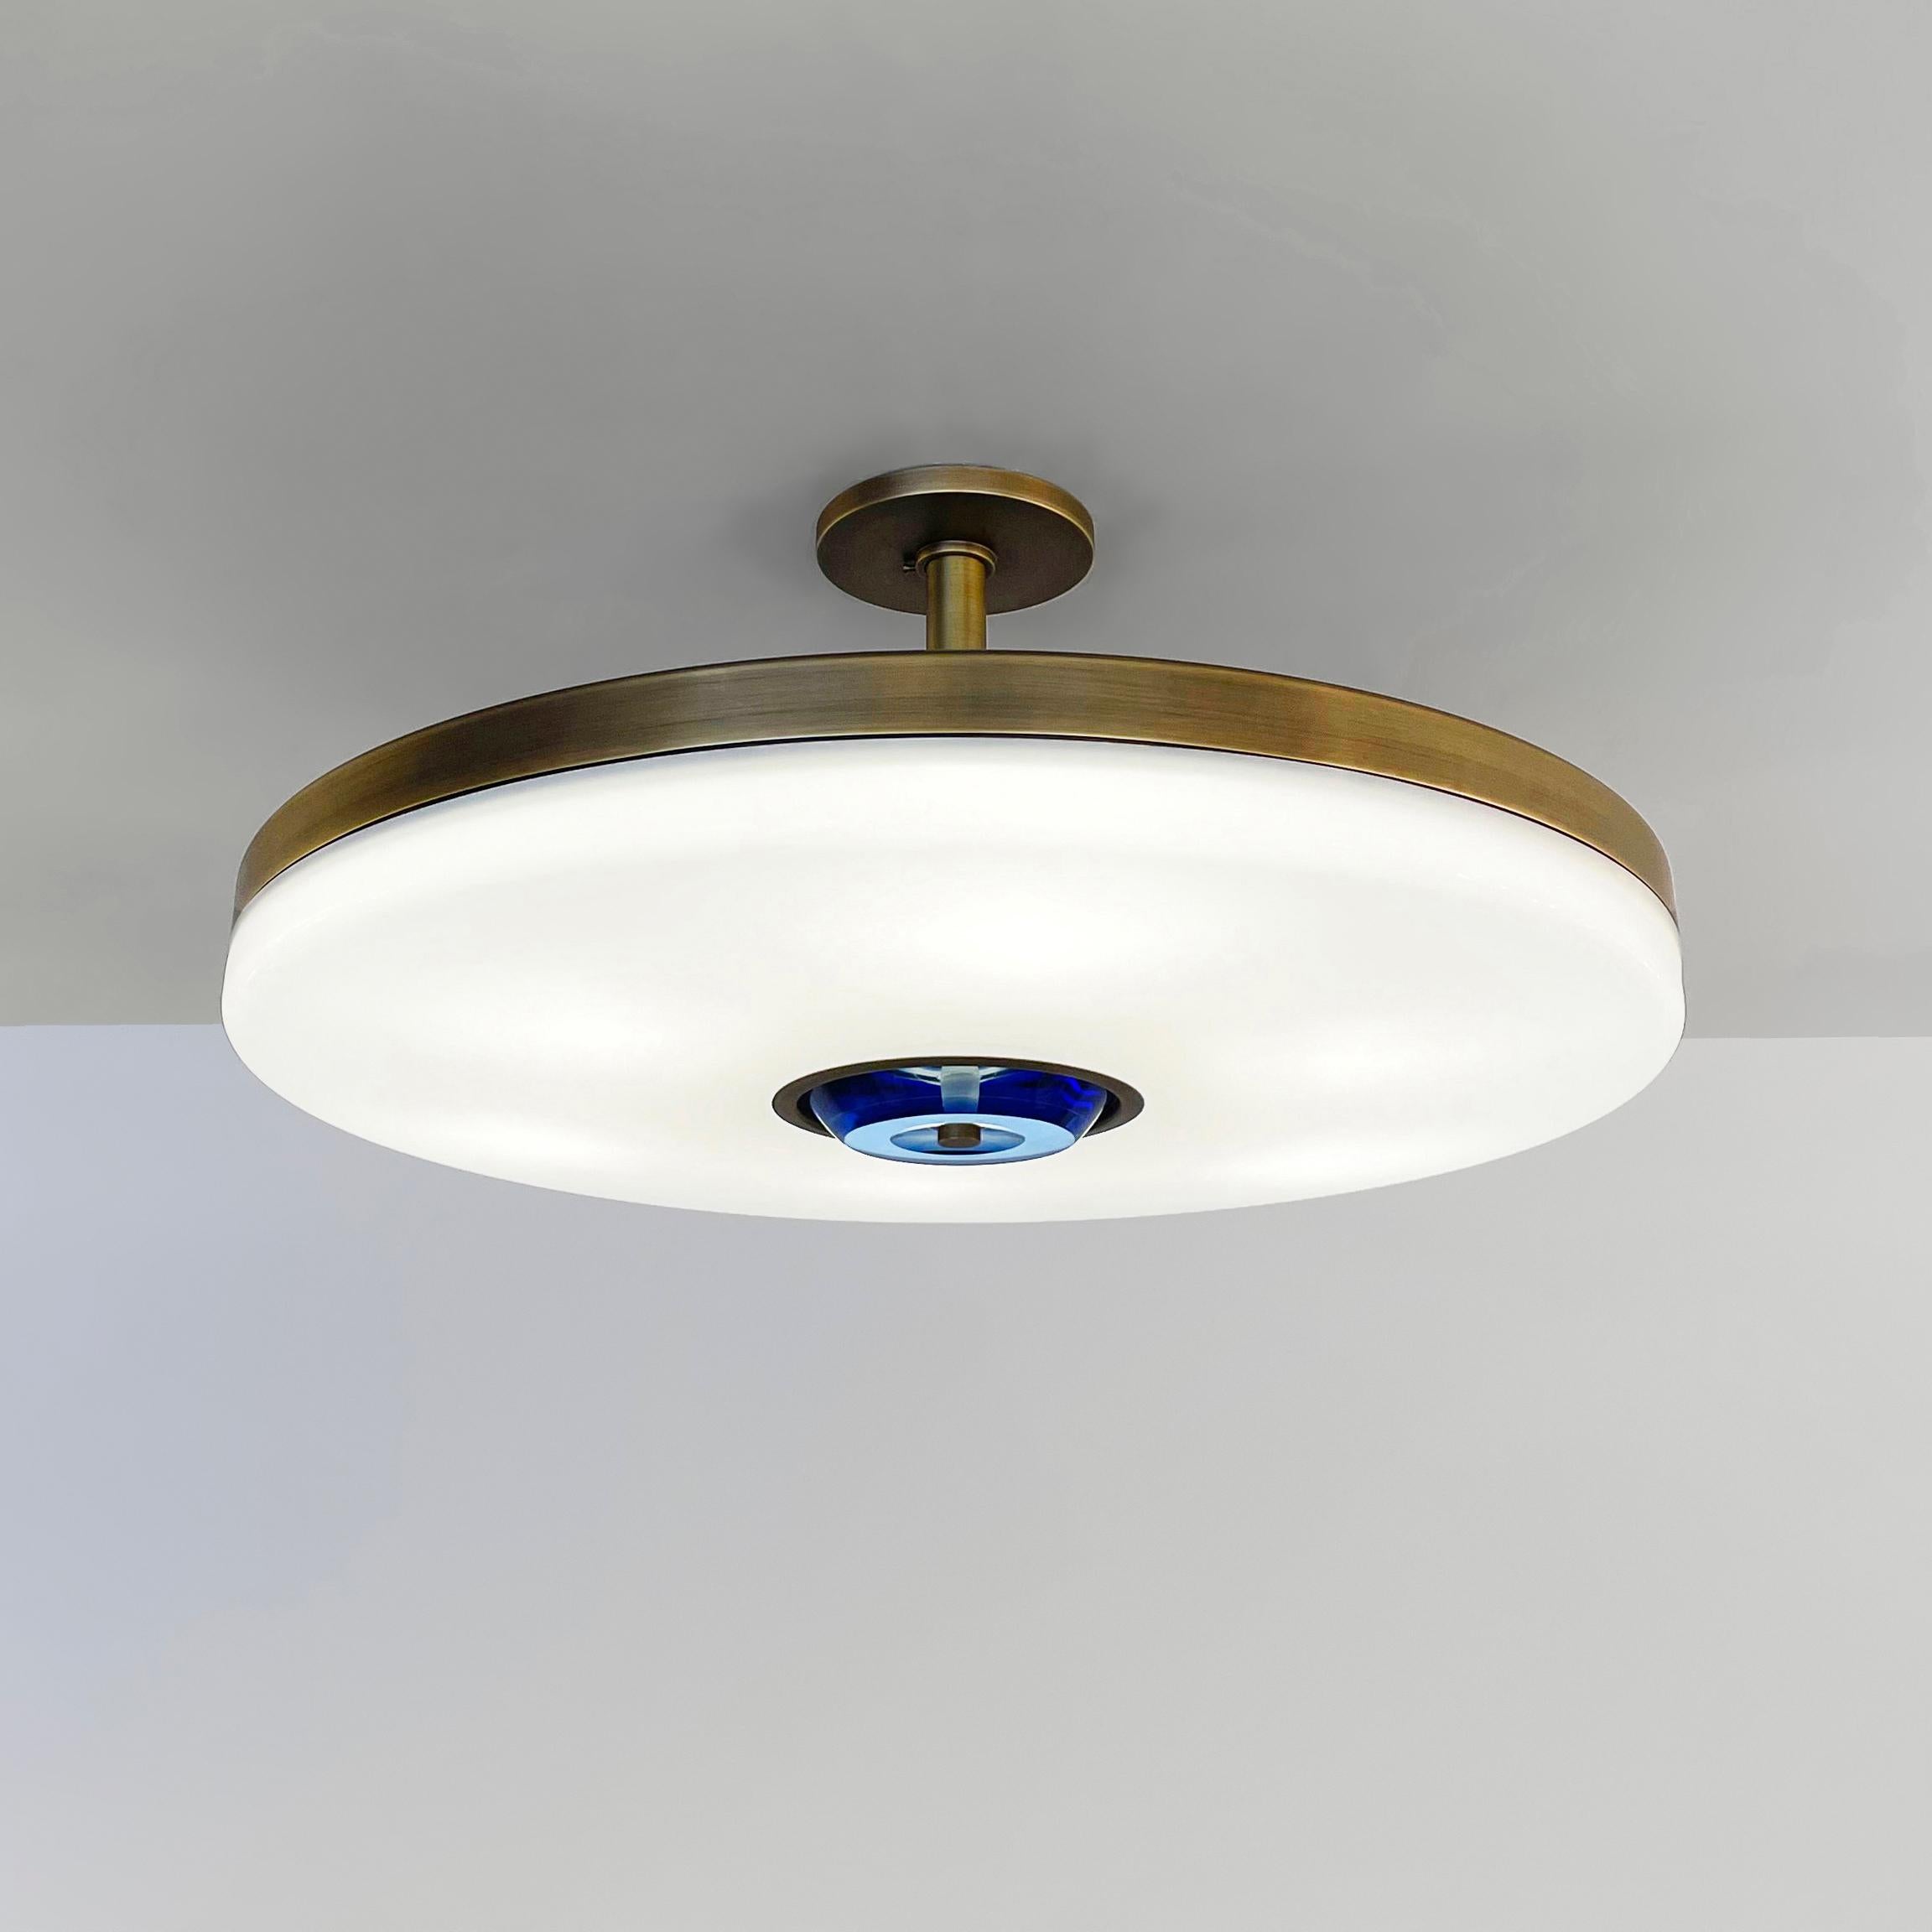 Modern Iris Ceiling Light by Gaspare Asaro - Brunito Nero Finish For Sale